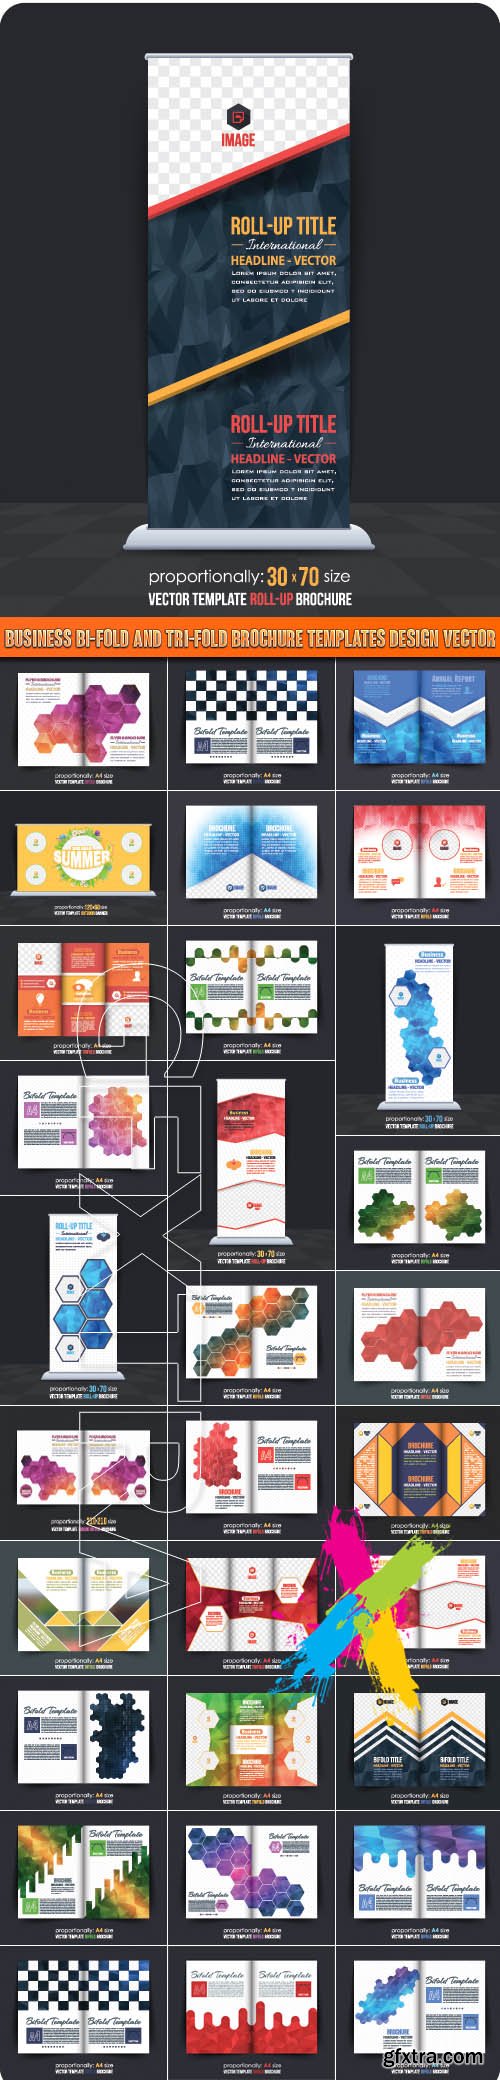 Business bi-fold and tri-fold brochure templates design vector